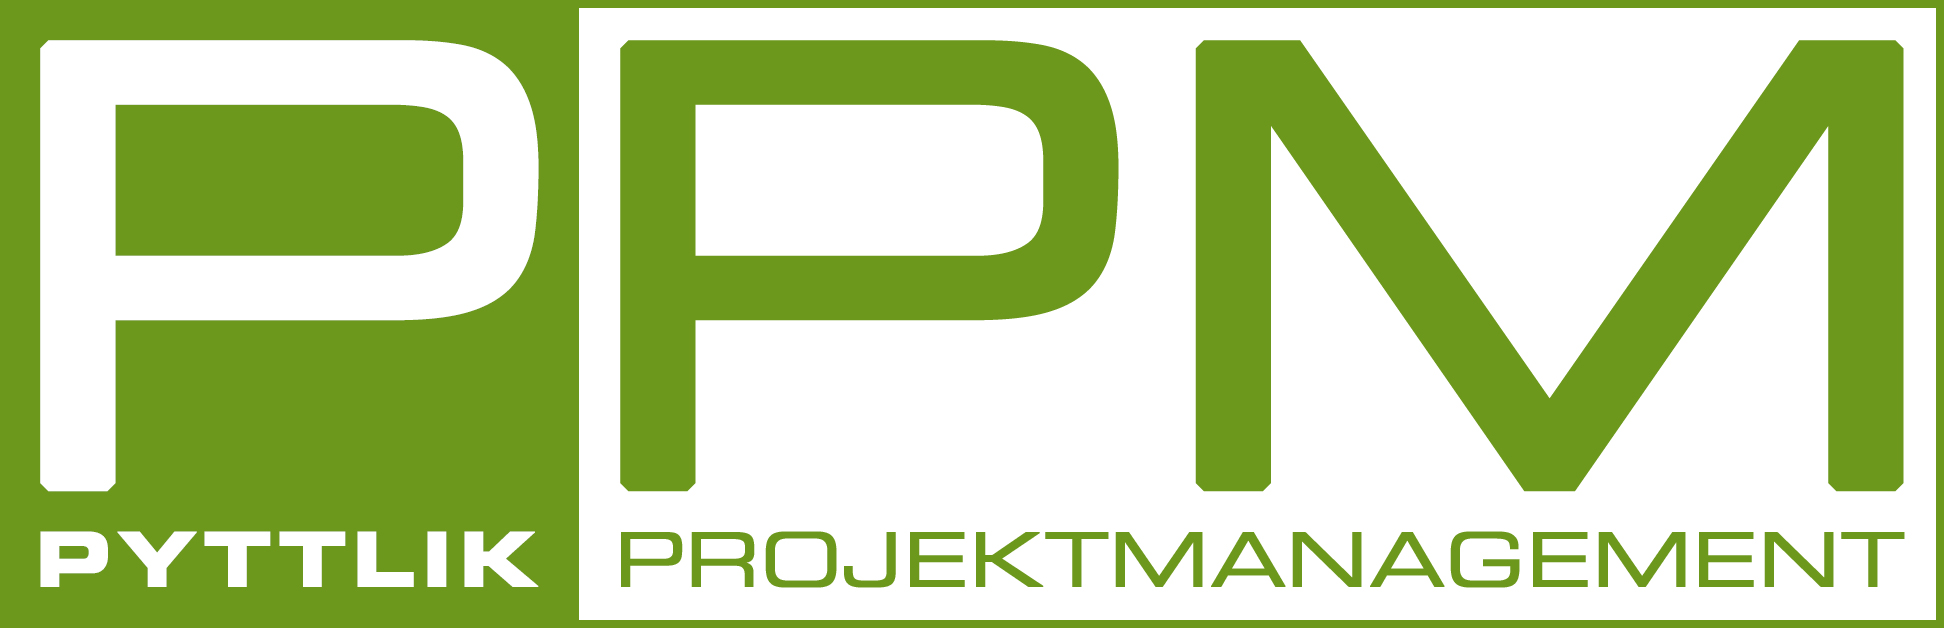 Pyttlik Projektmanagement GmbH profitiert vom komplexen Funktionsumfang in AVA.relax